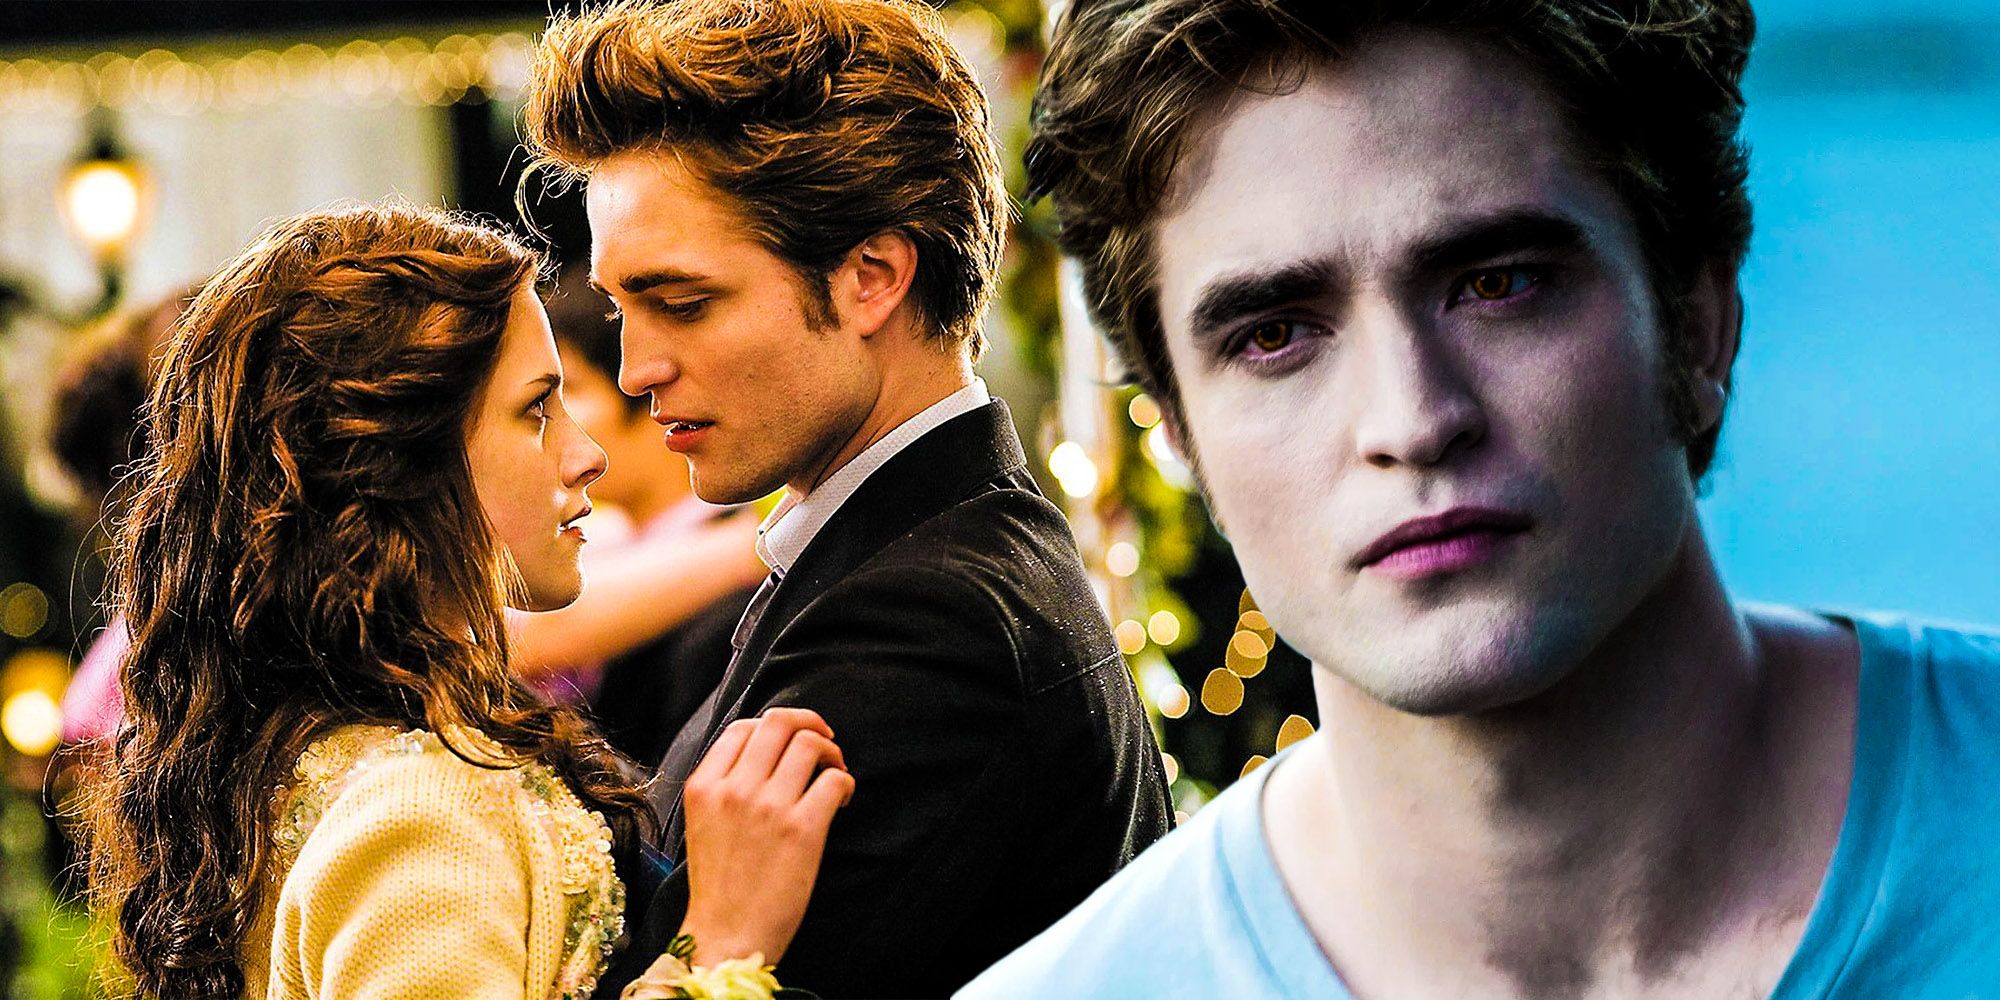 Edward and Bella dance with an Edward close up : Twilight